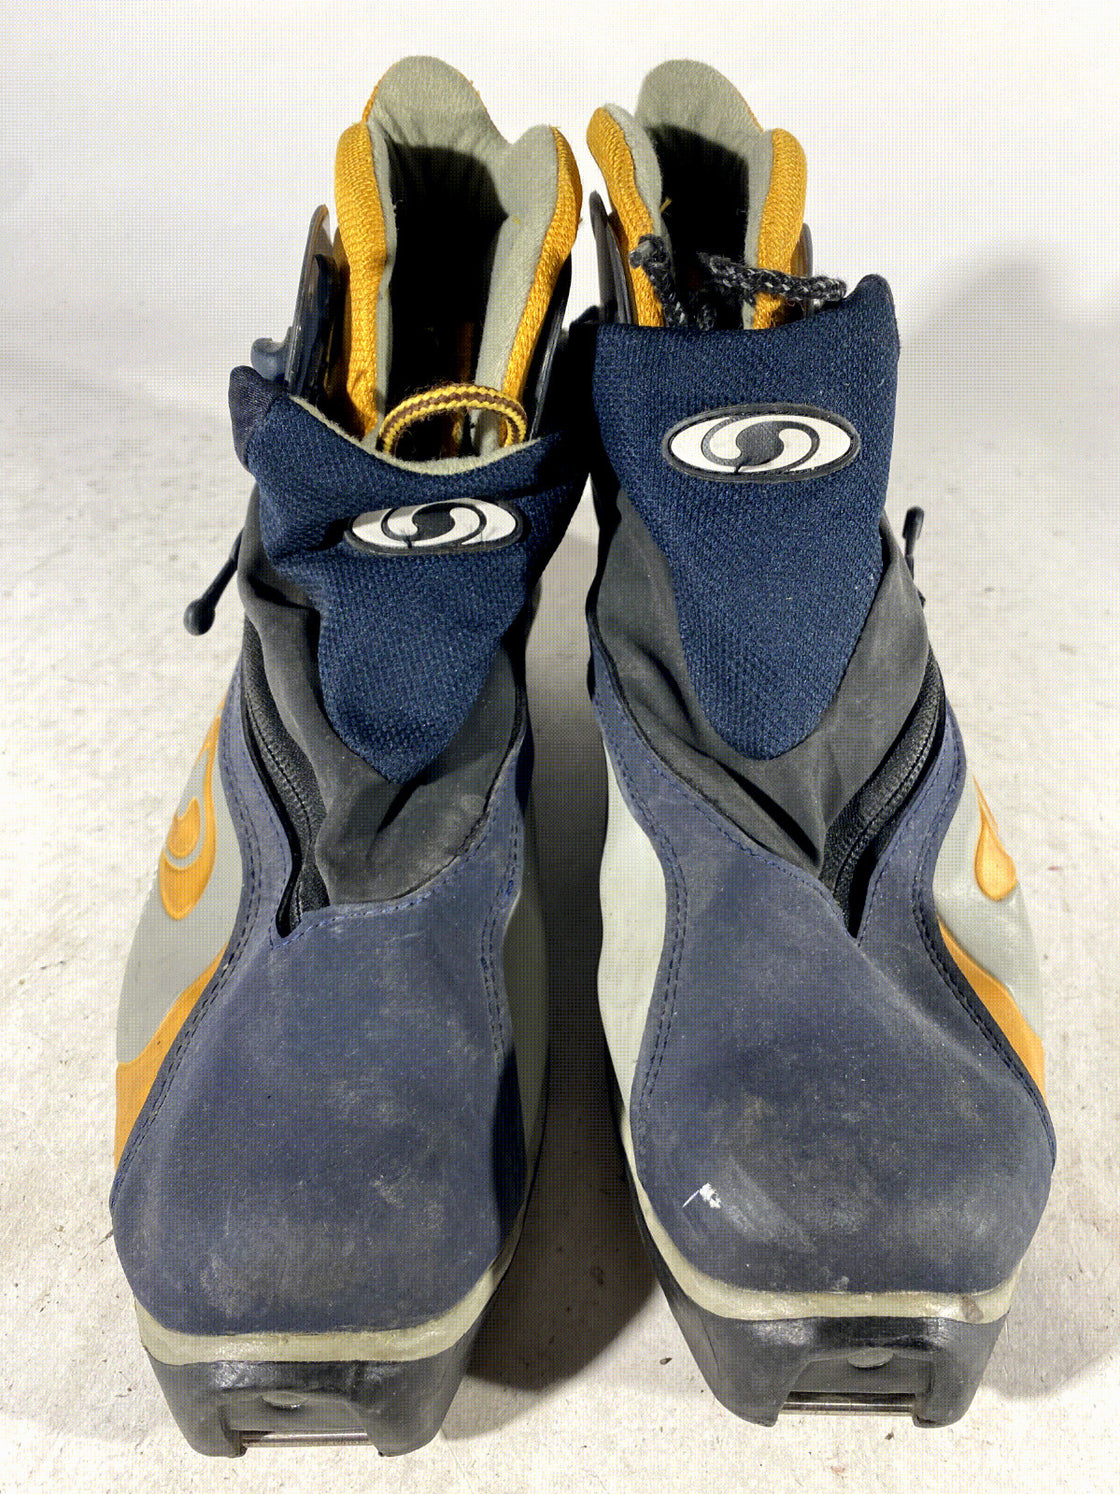 Salomon Classic Nordic Cross Country Ski Boots Size EU42 2/3 US9 SNS Profil